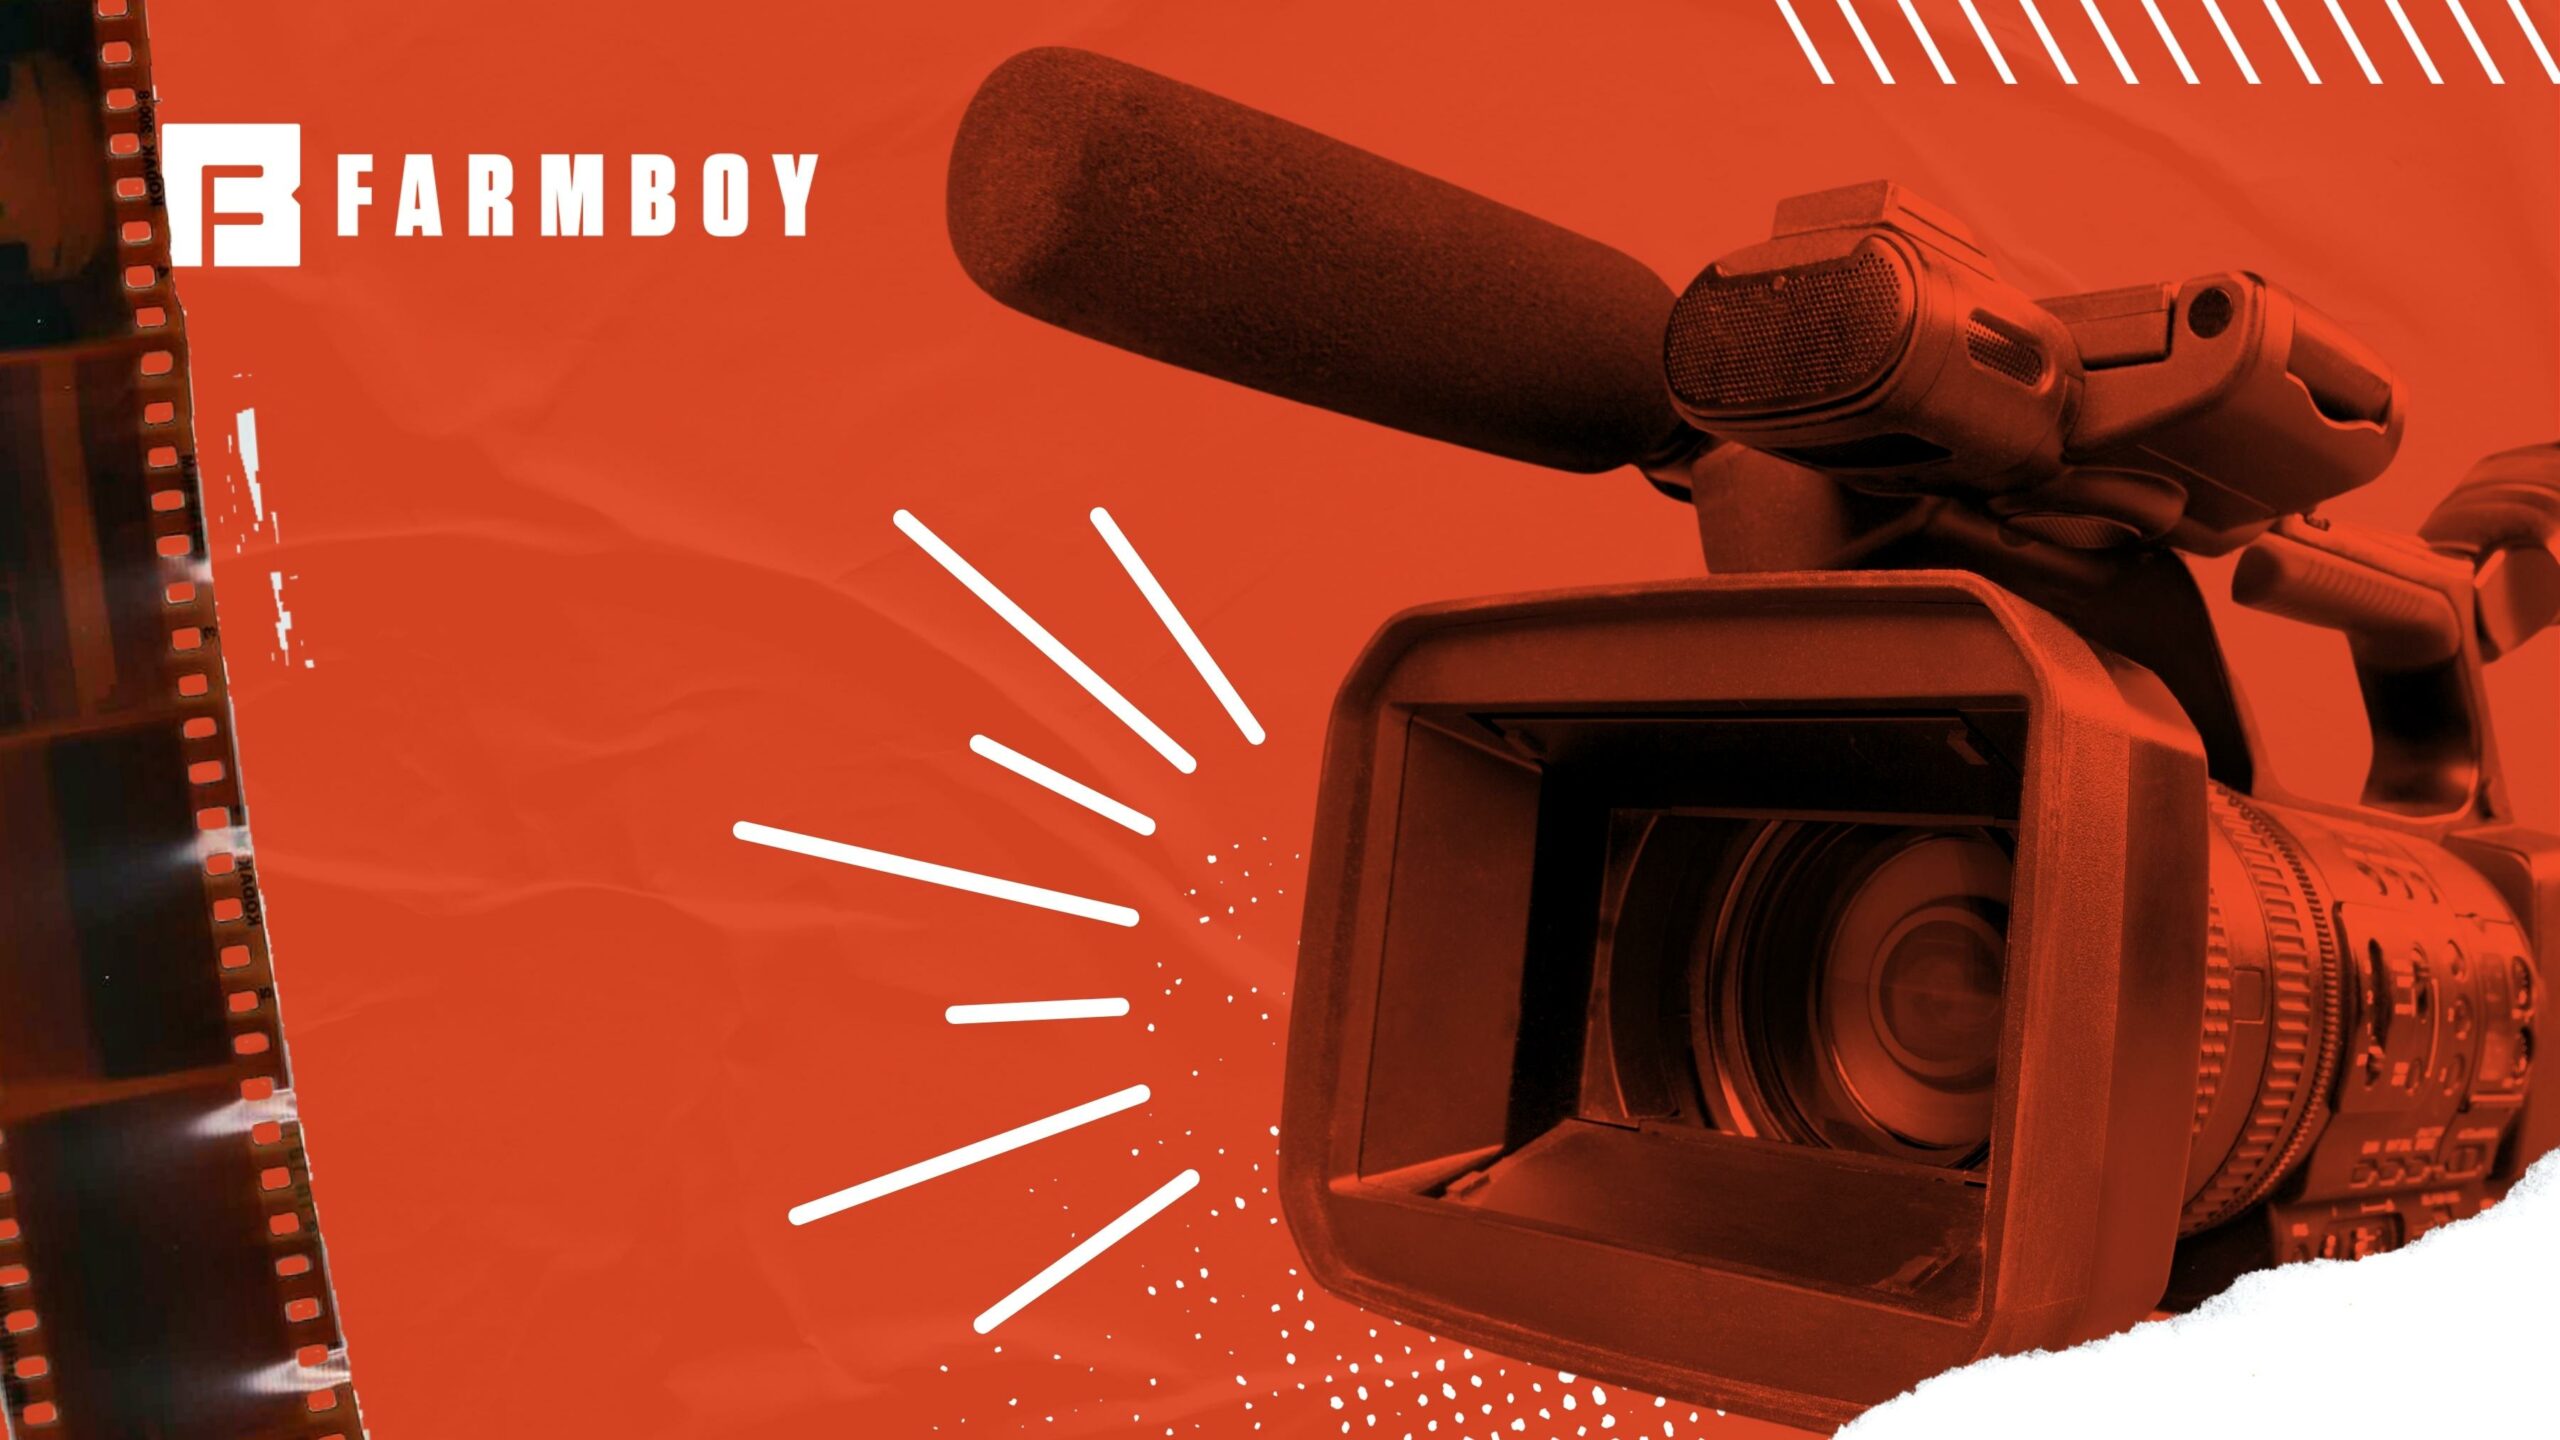 Video Camera branded with Farmboy